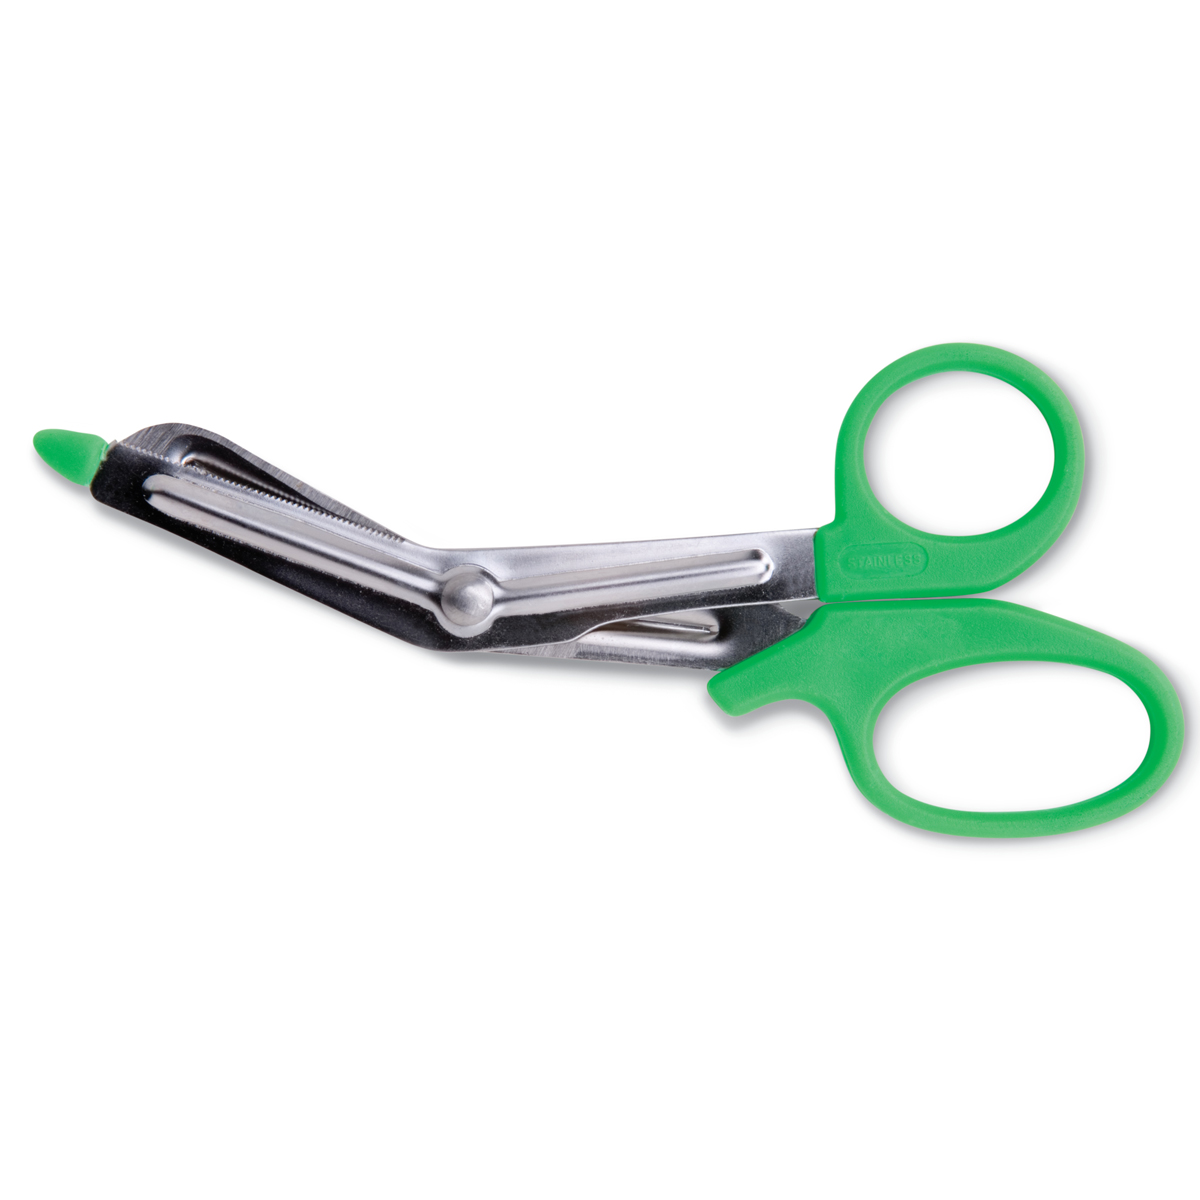 Utility Scissors Image